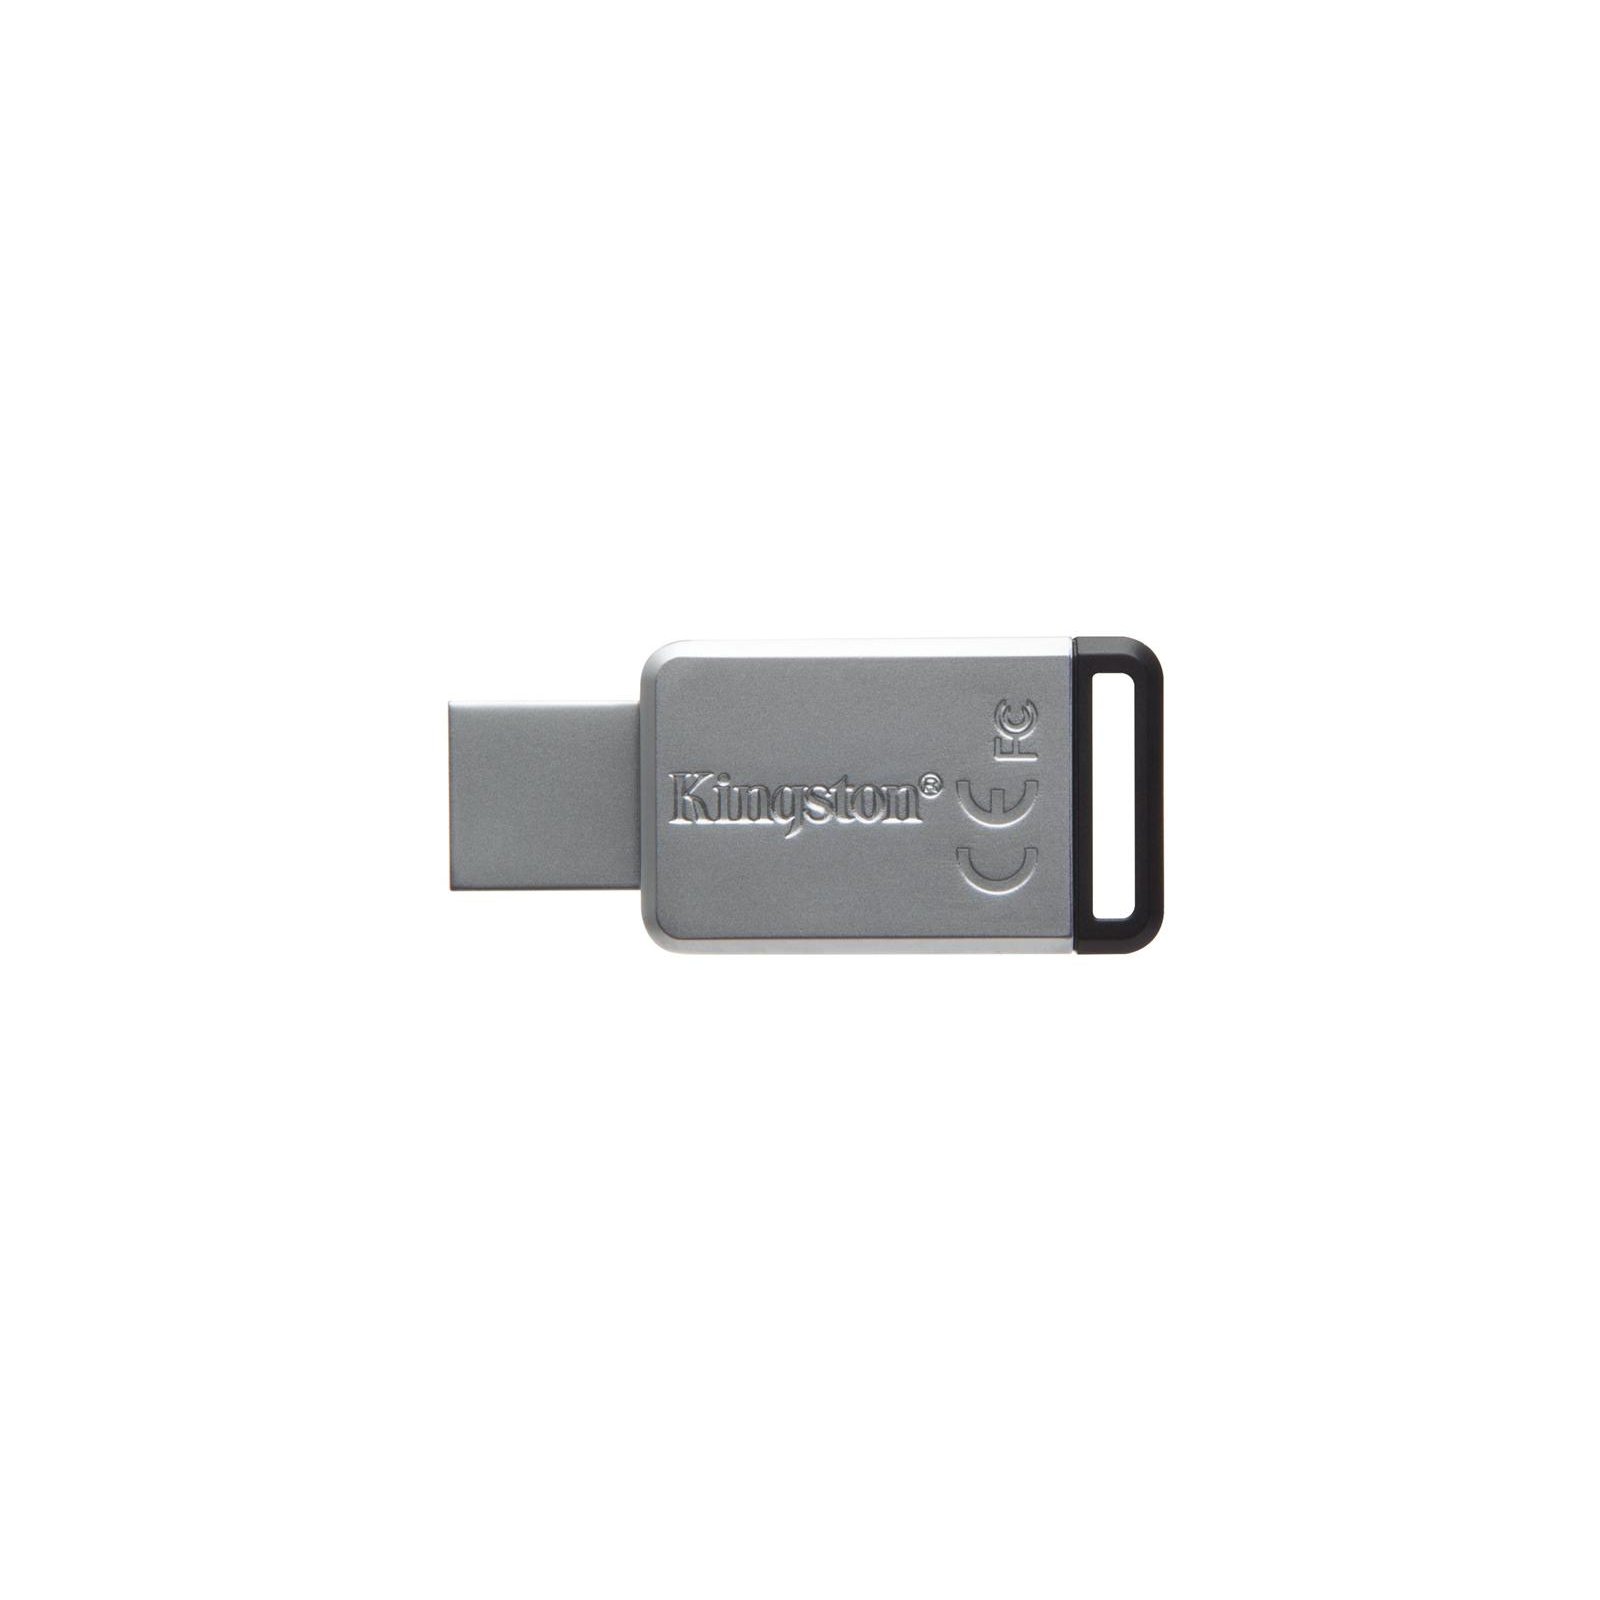 USB флеш накопитель Kingston 32GB DT50 USB 3.1 (DT50/32GB) изображение 2